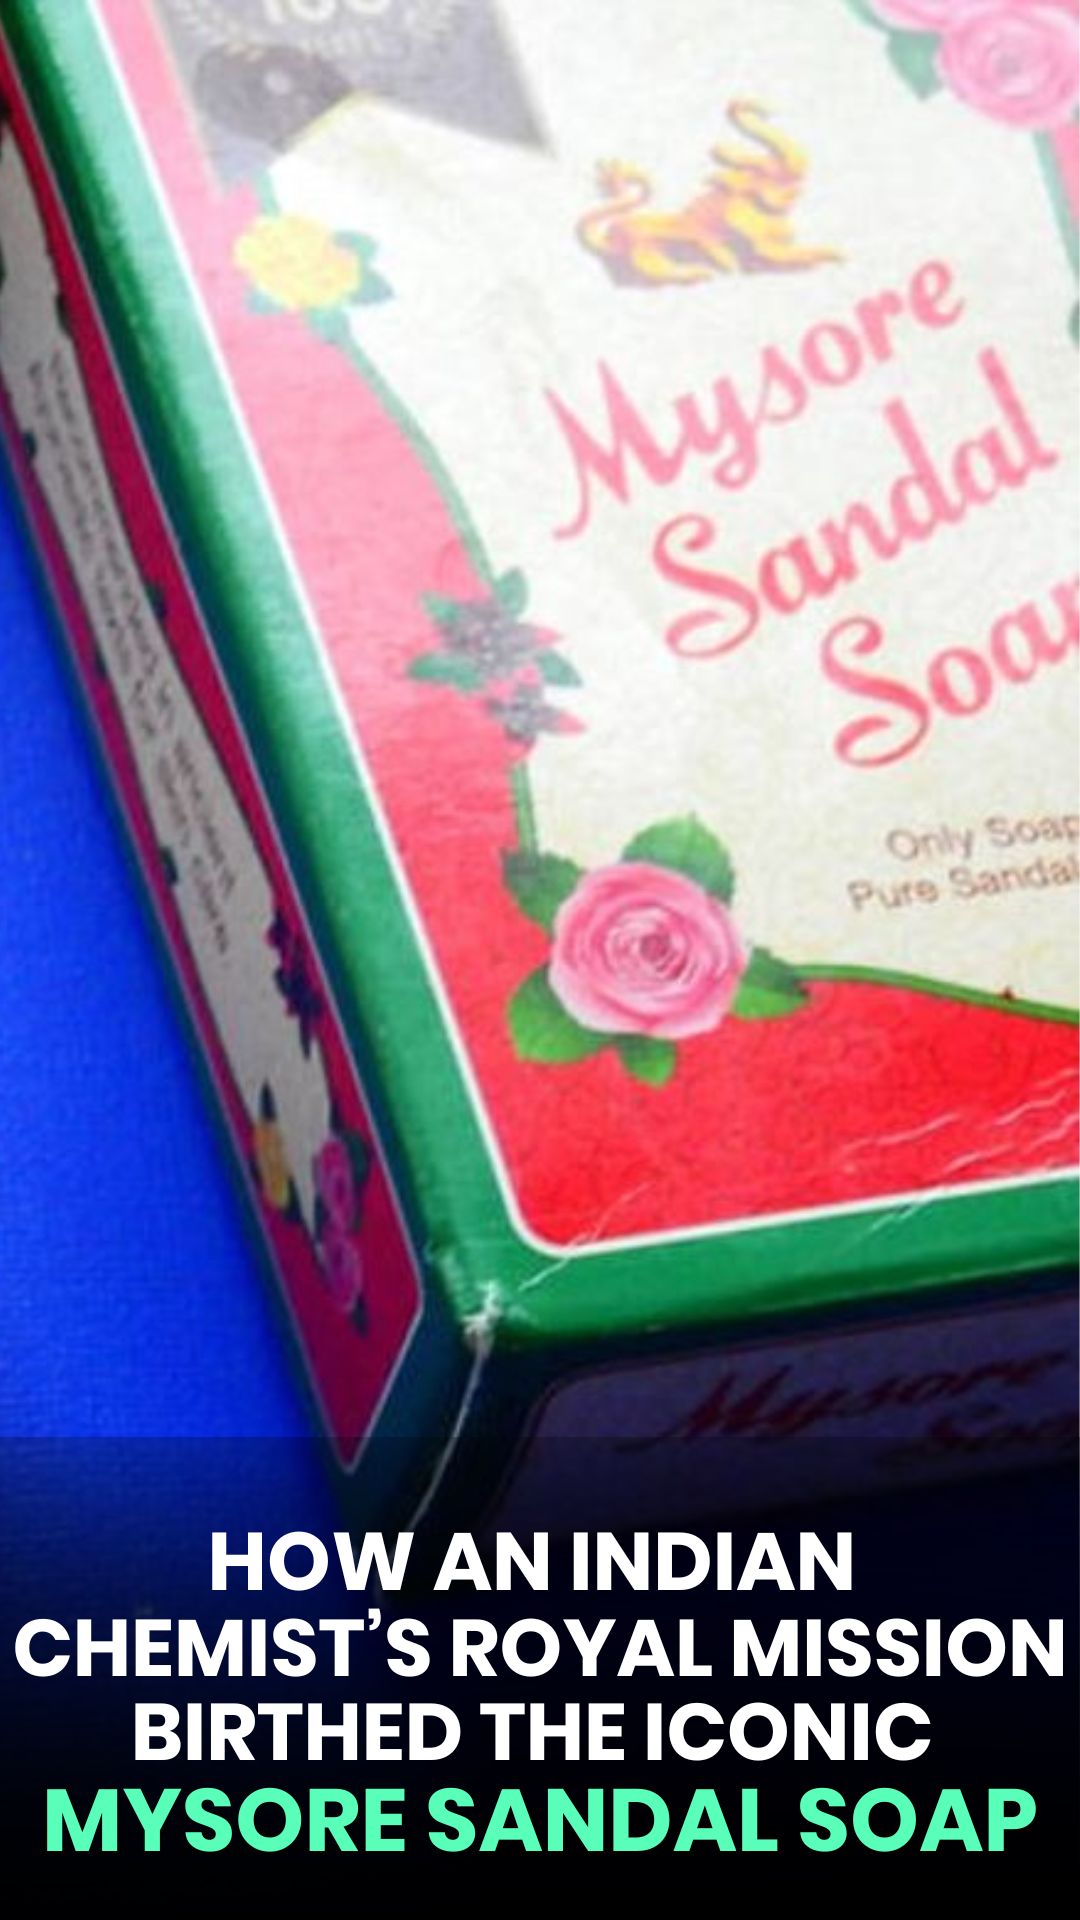 Mysore Sandal Soap 4.41 oz (125 Grams) Box (Pack of 5)